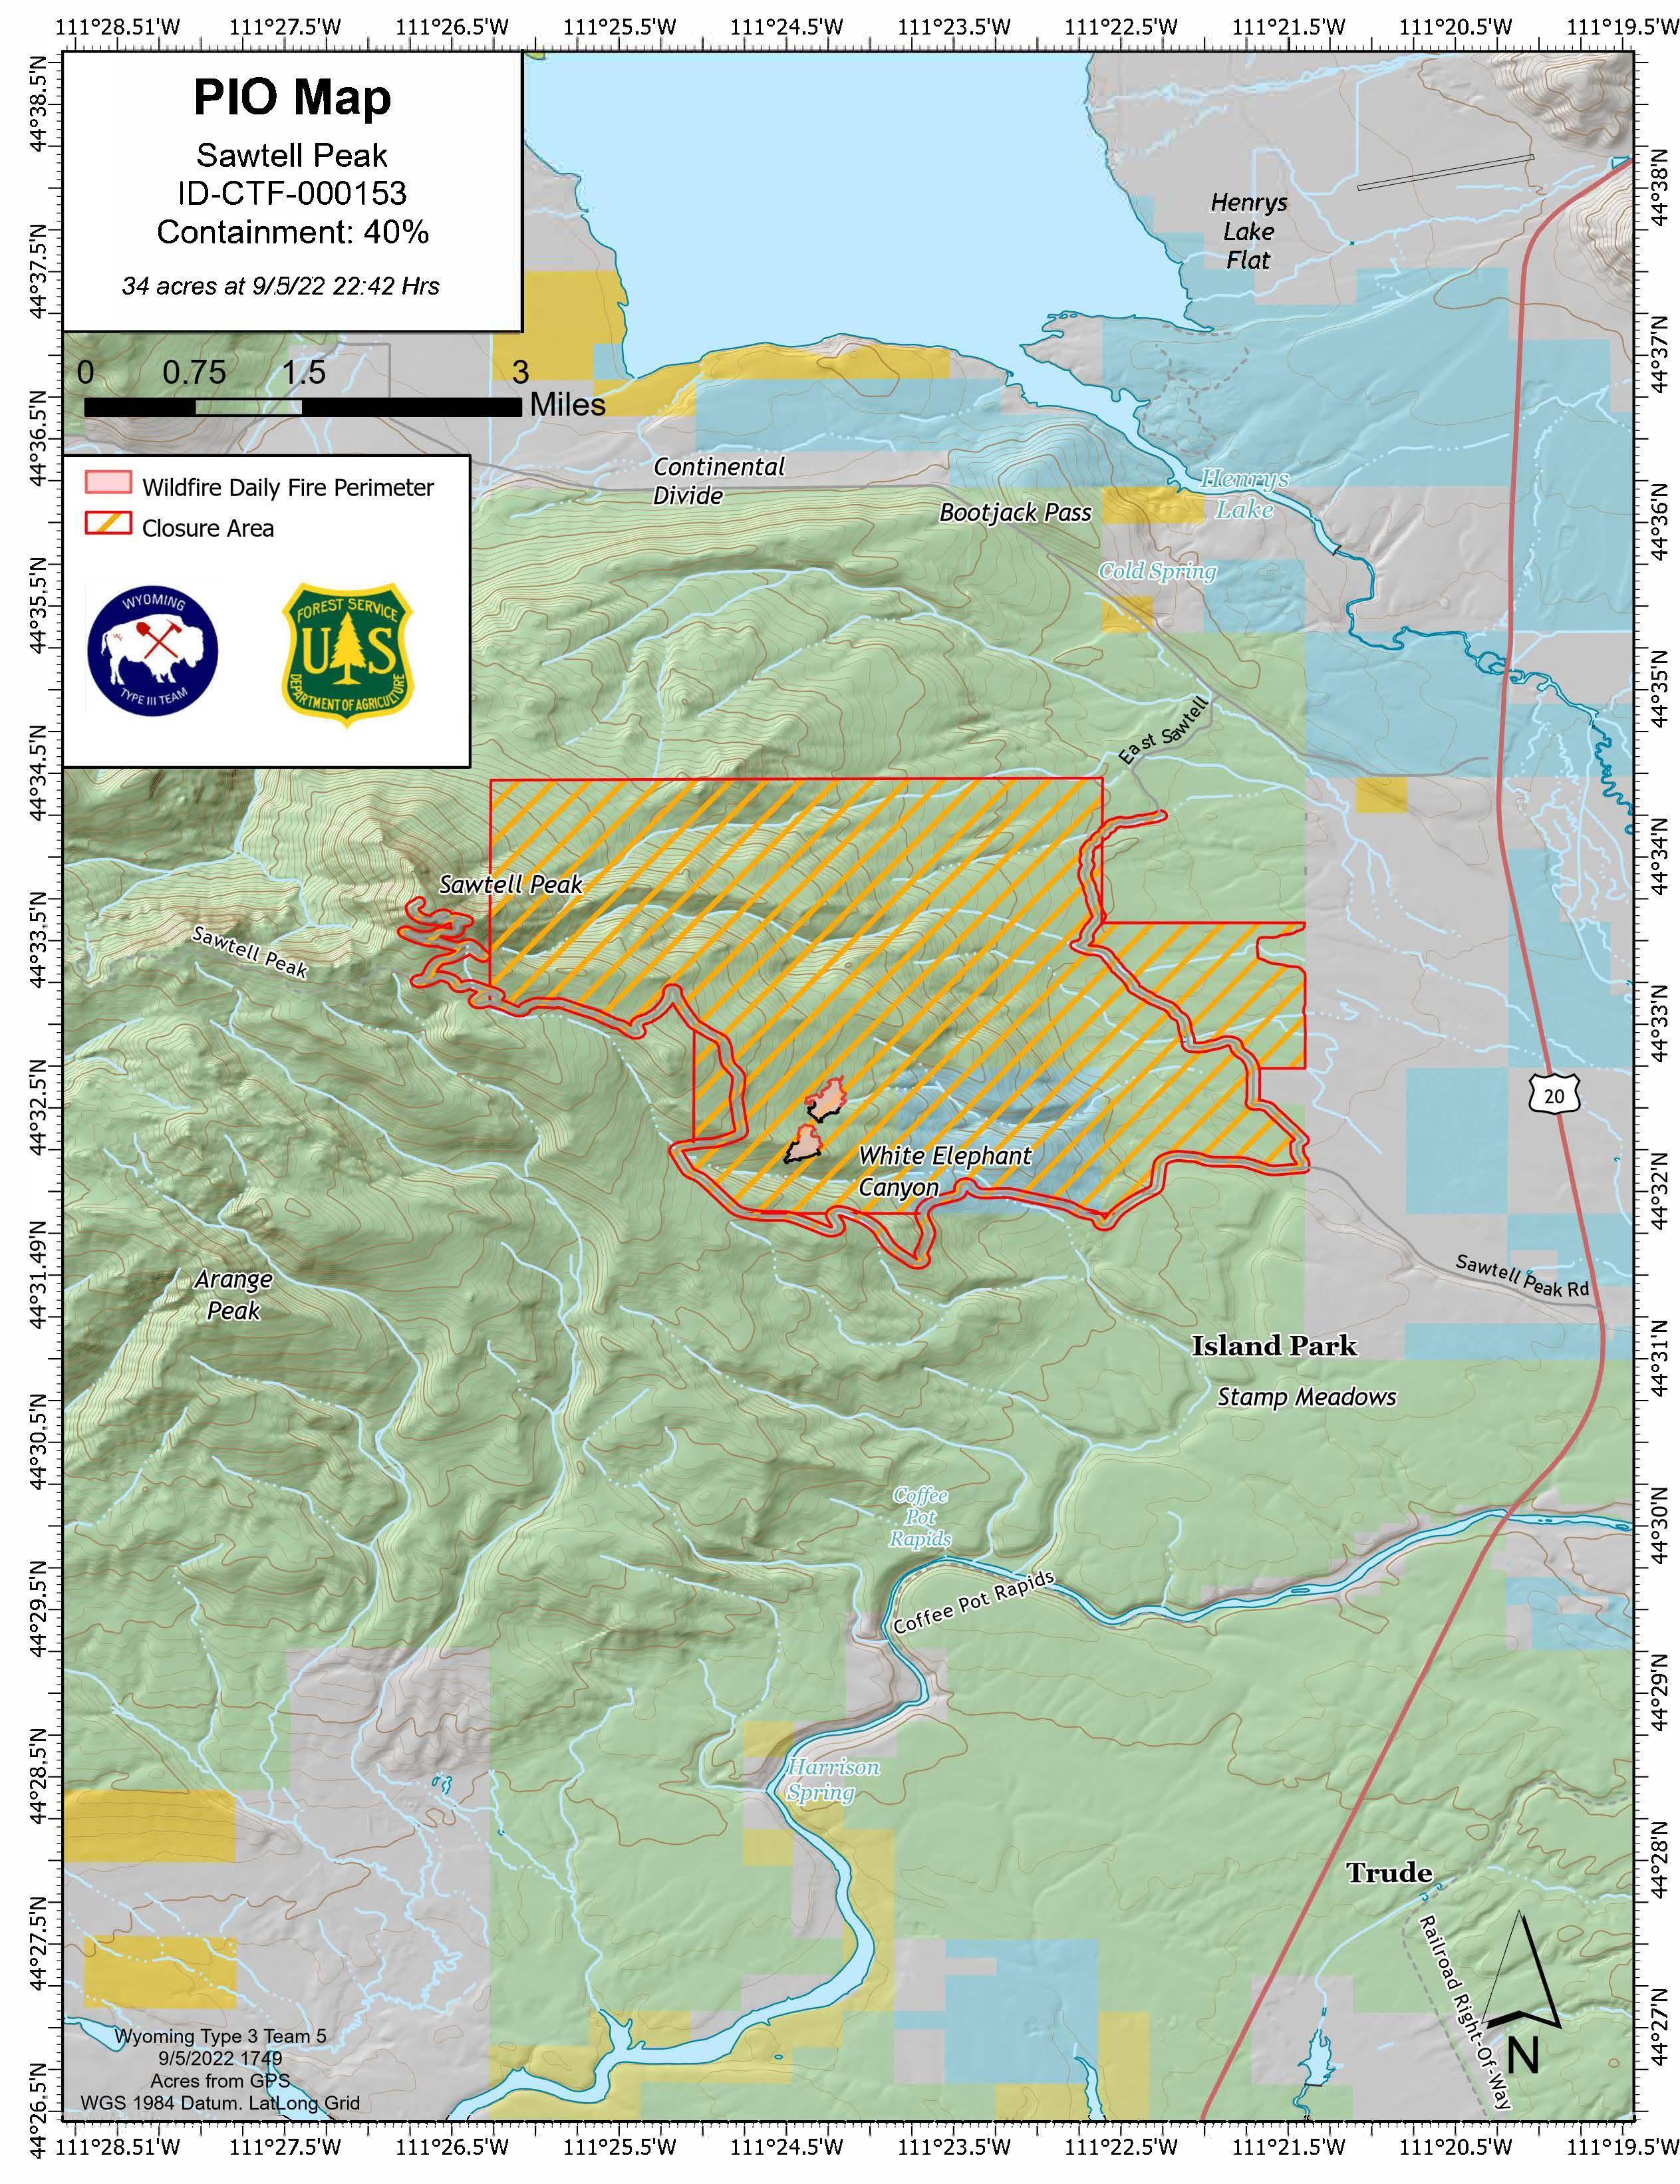 Sawtell Peak Public Information Map 9.6.2022